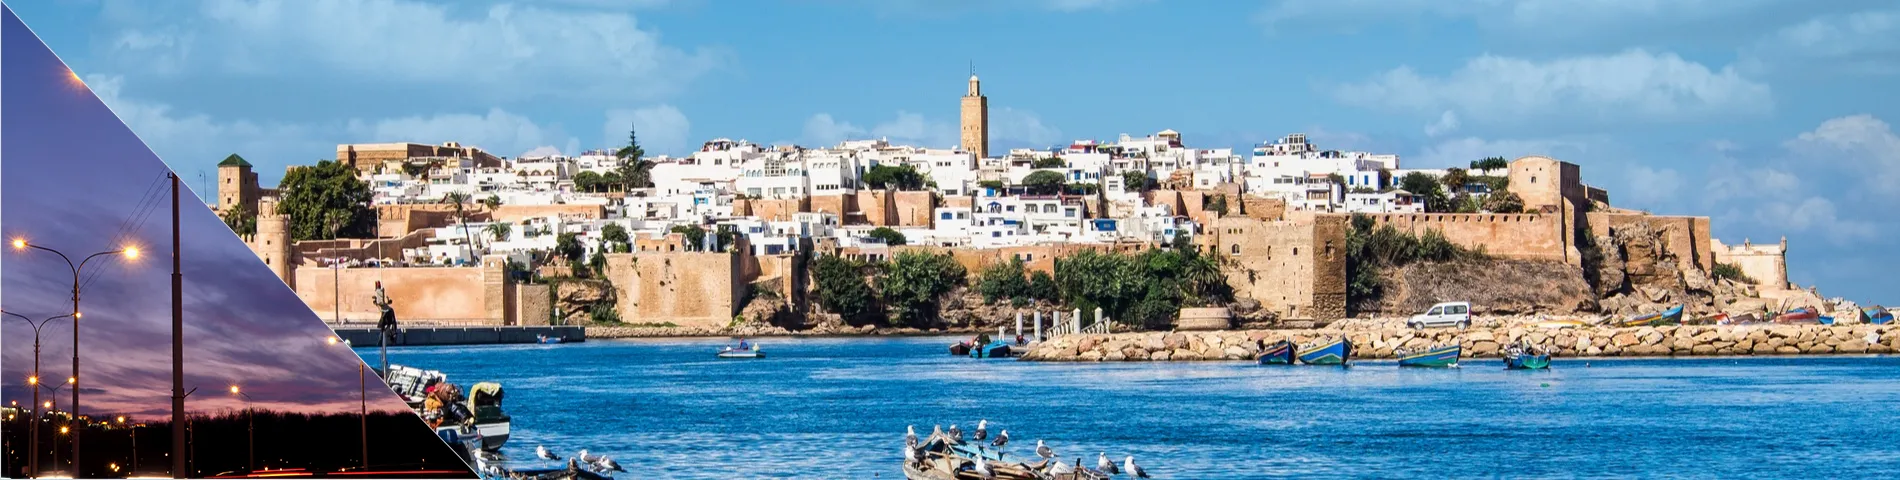 Rabat - Parcial de Tarde